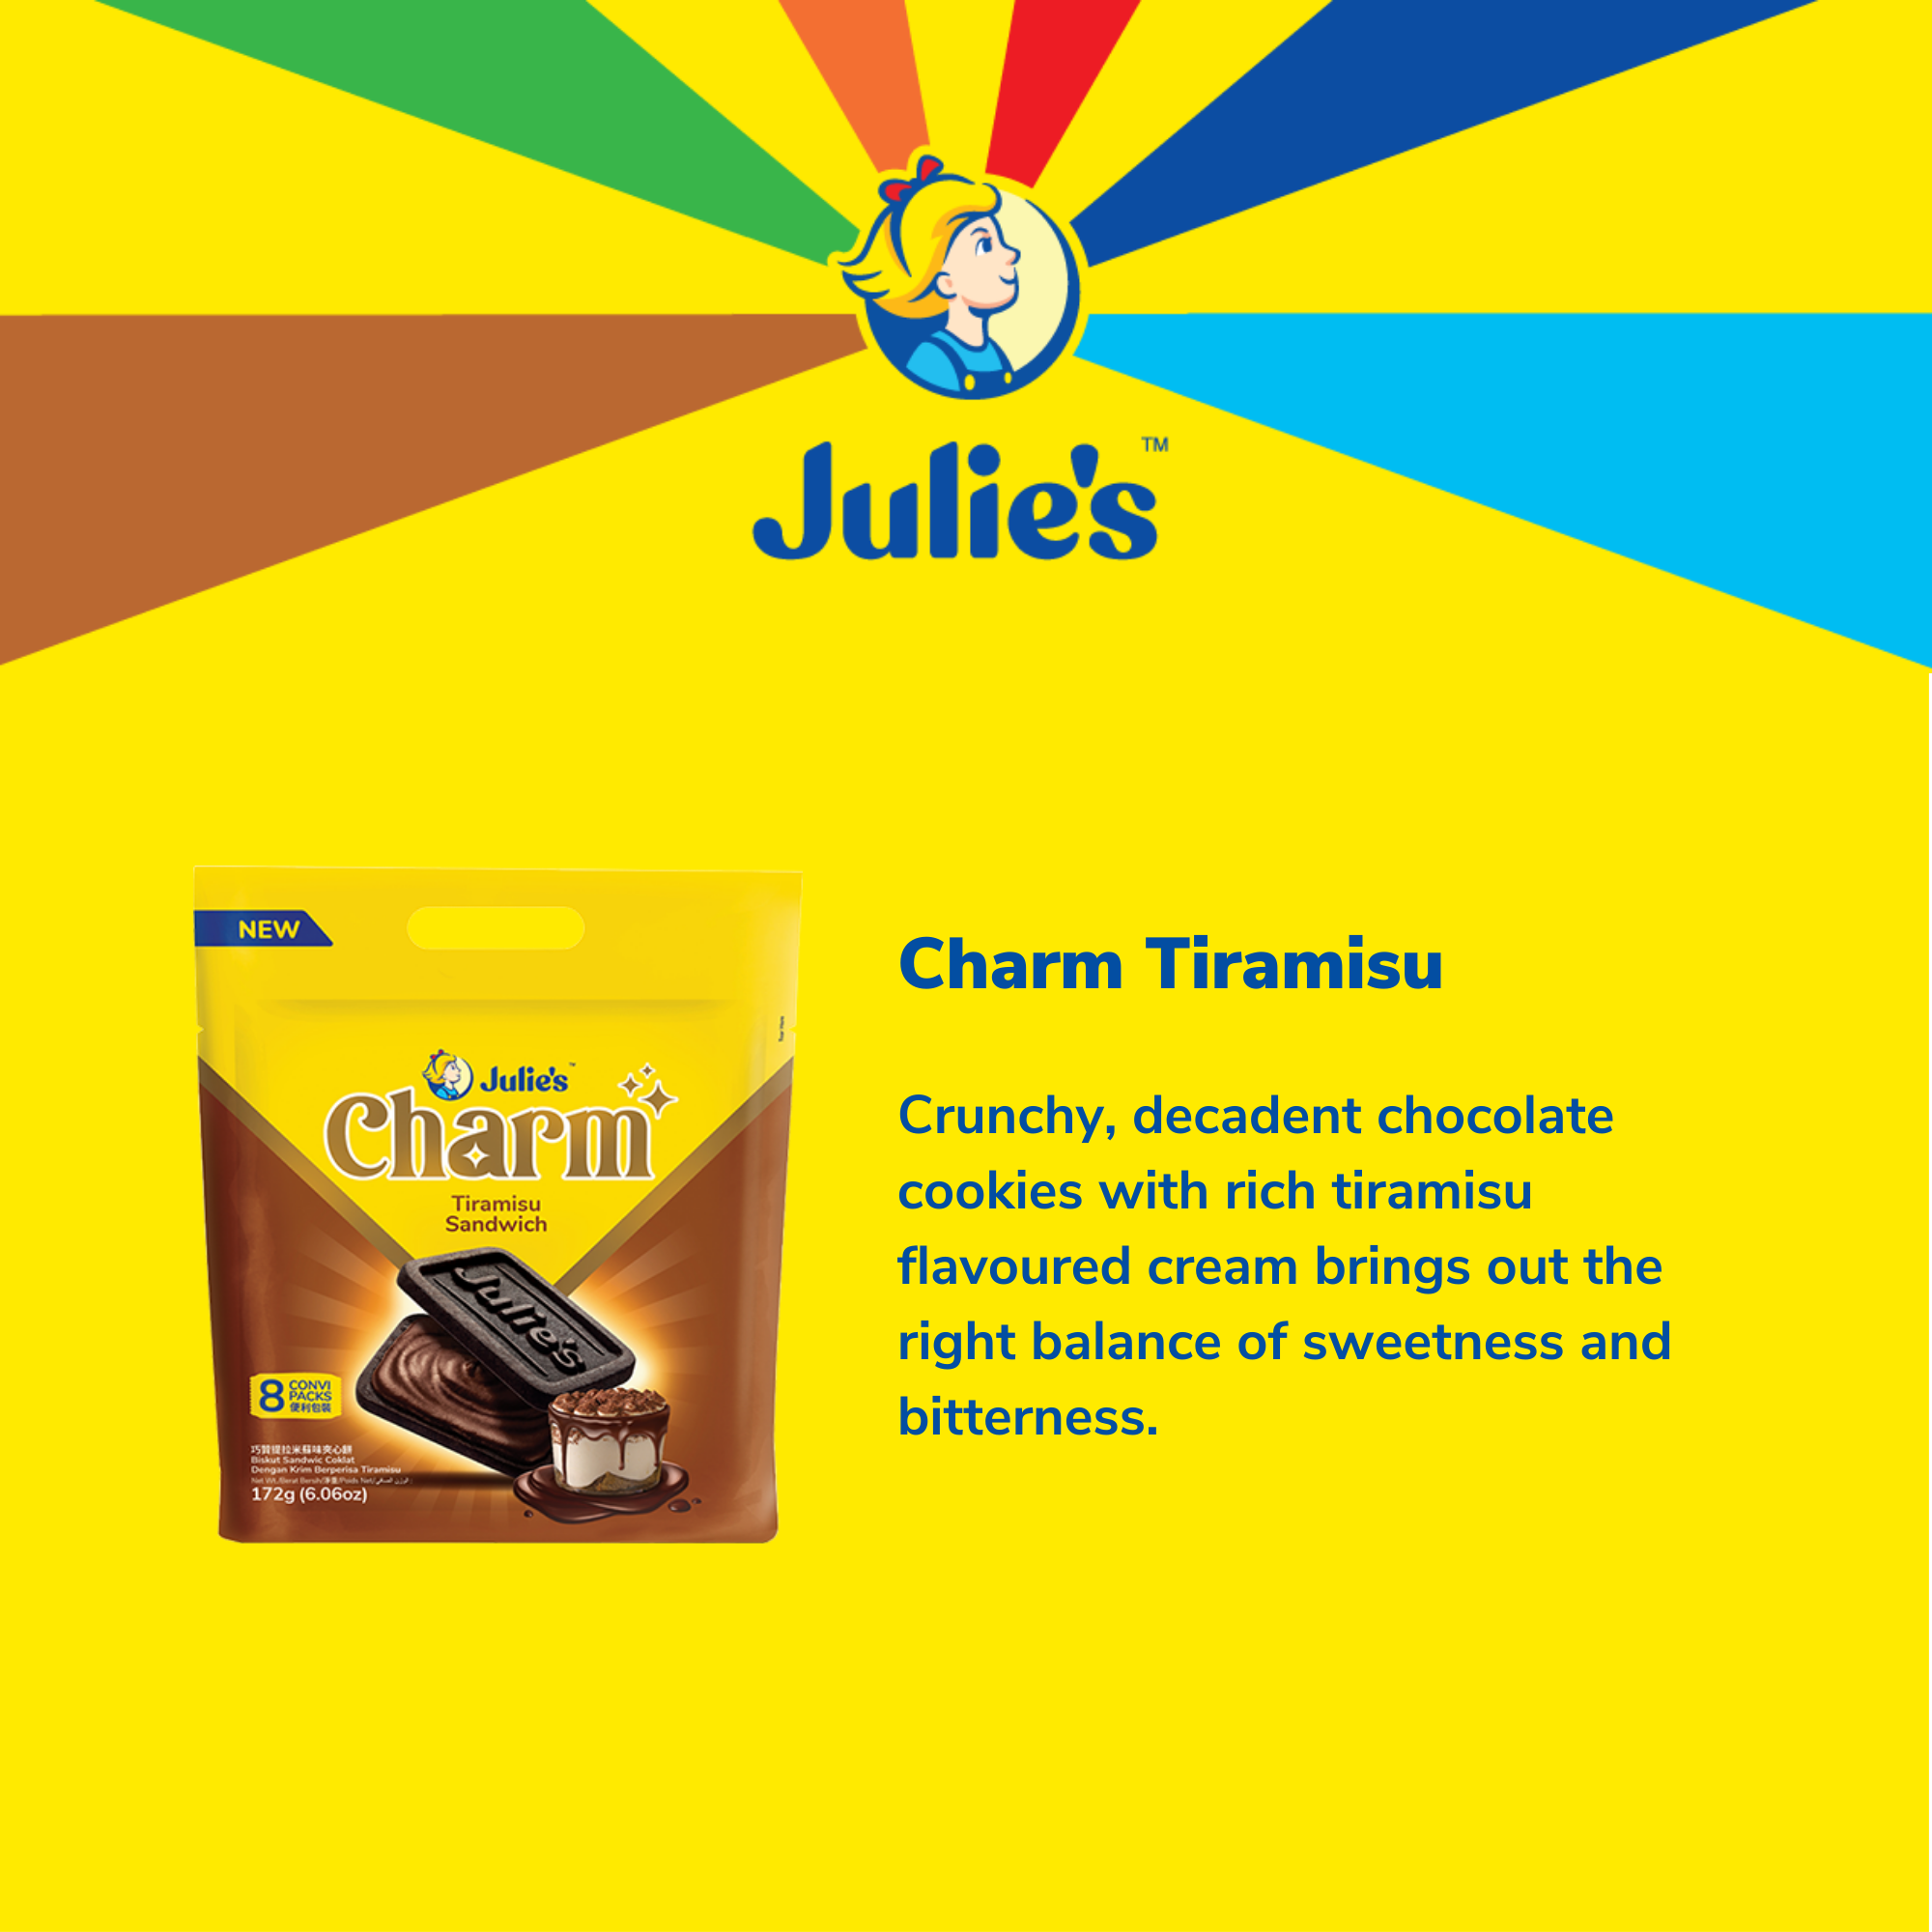 Julie's Charm Tiramisu Sandwich 172g x 2 packs